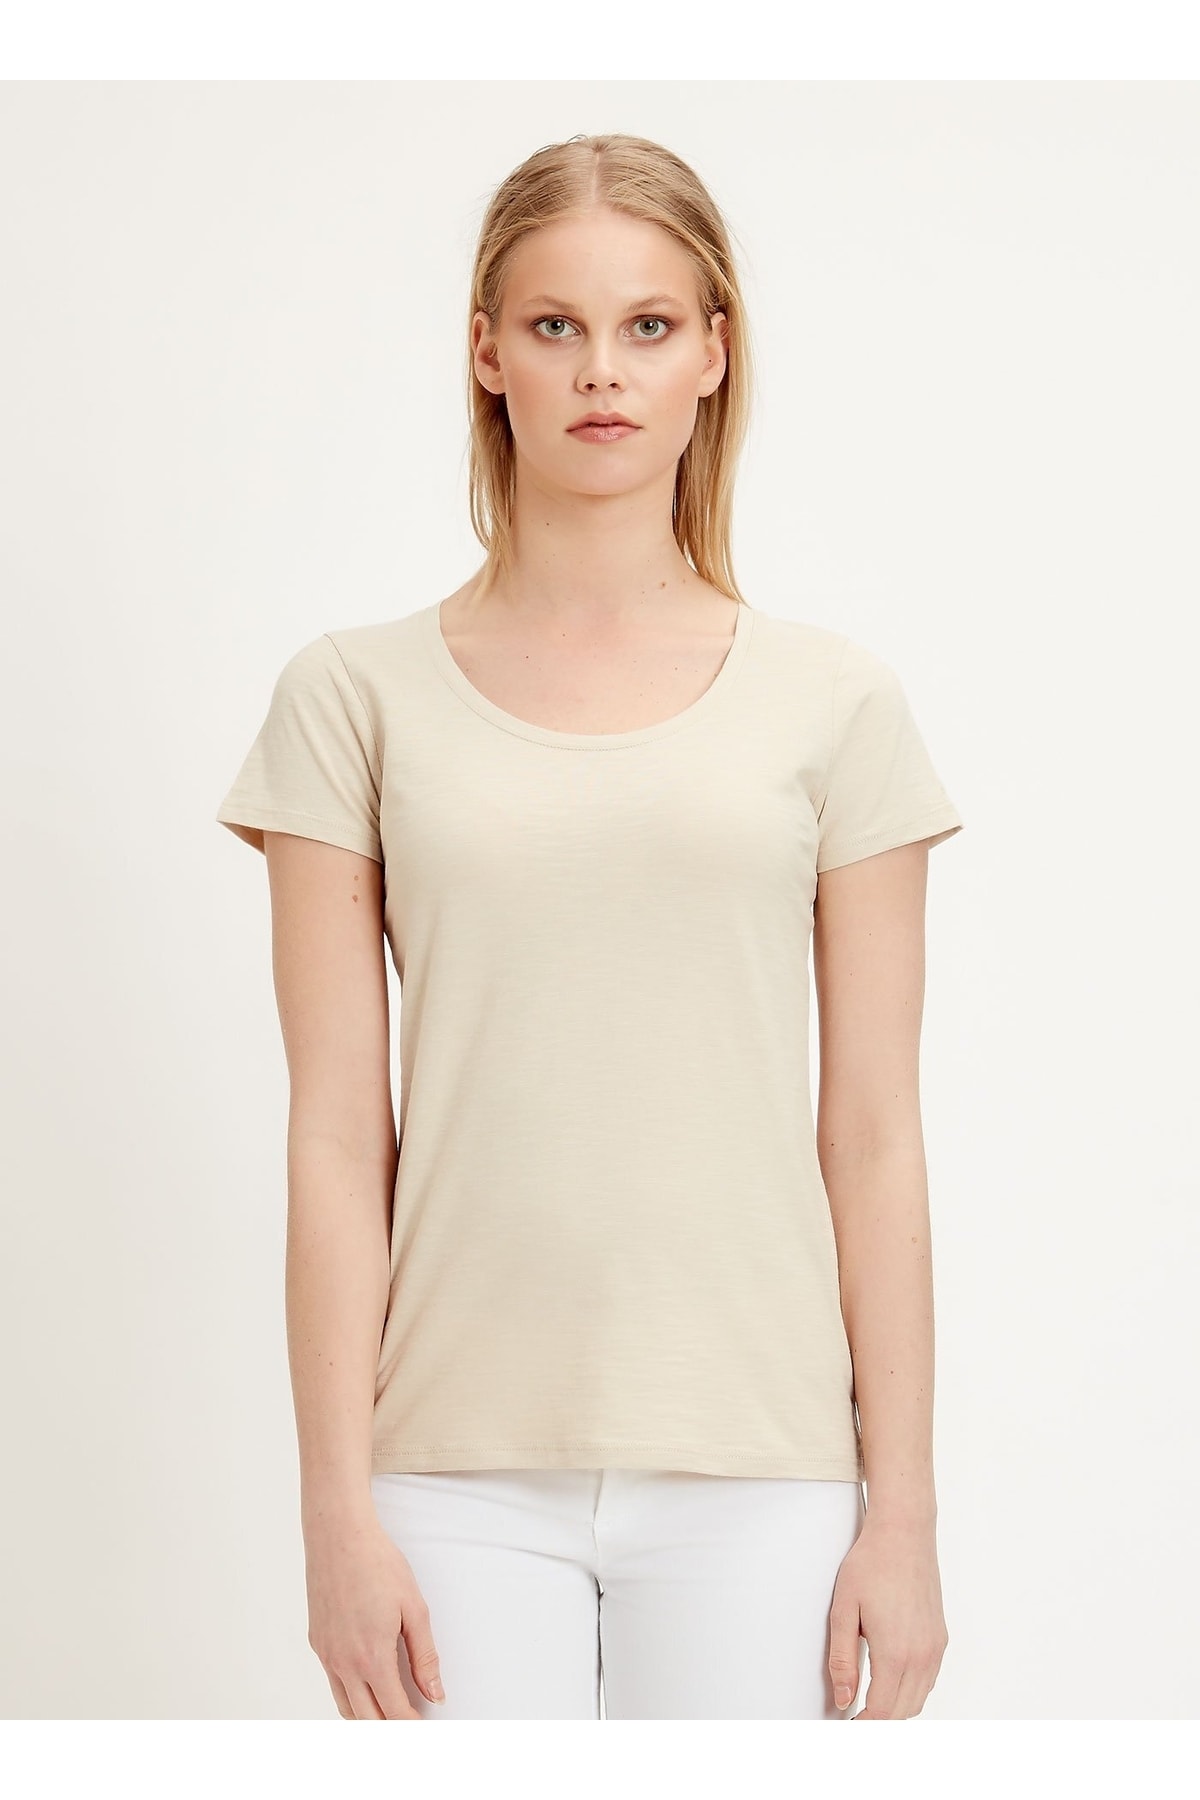 ORGANICATION T-Shirt Beige Slim Fit